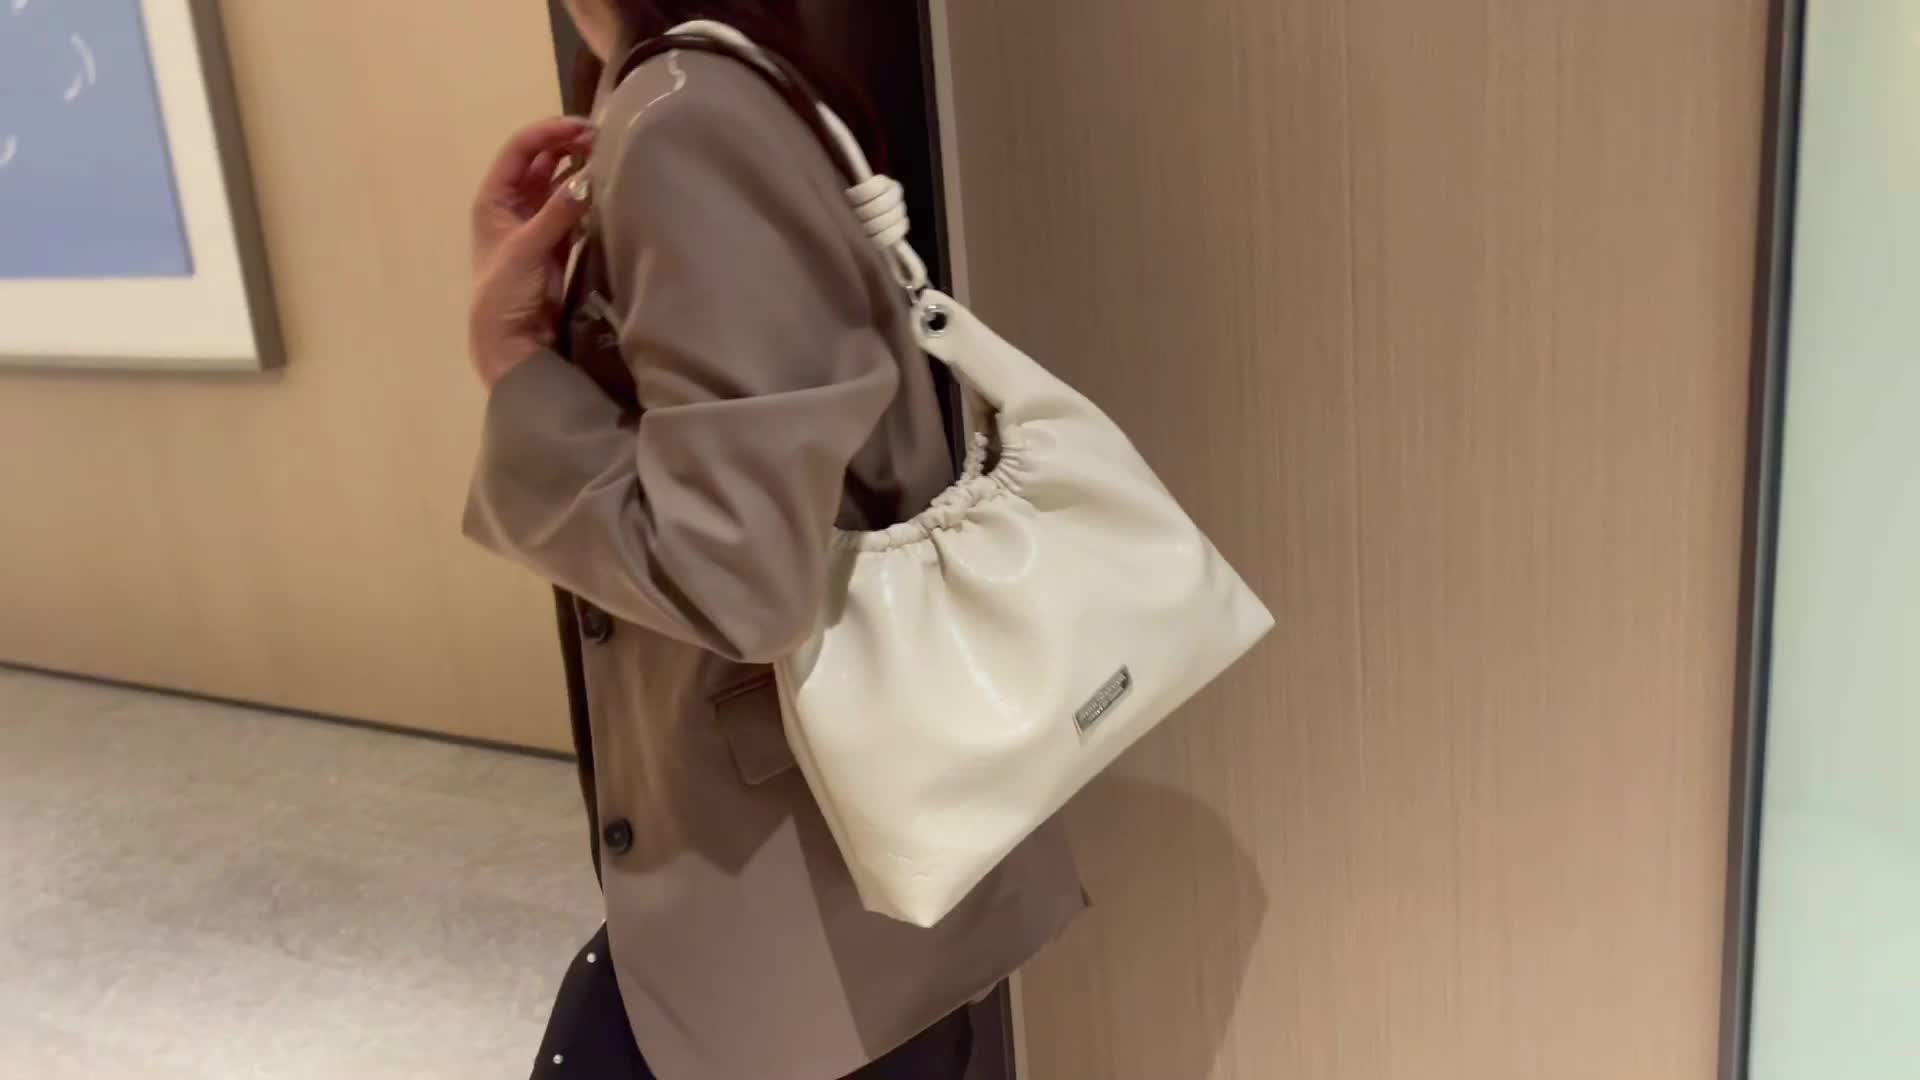 Givenchy Antigona Large Pouch Clutch Bag - ShopStyle